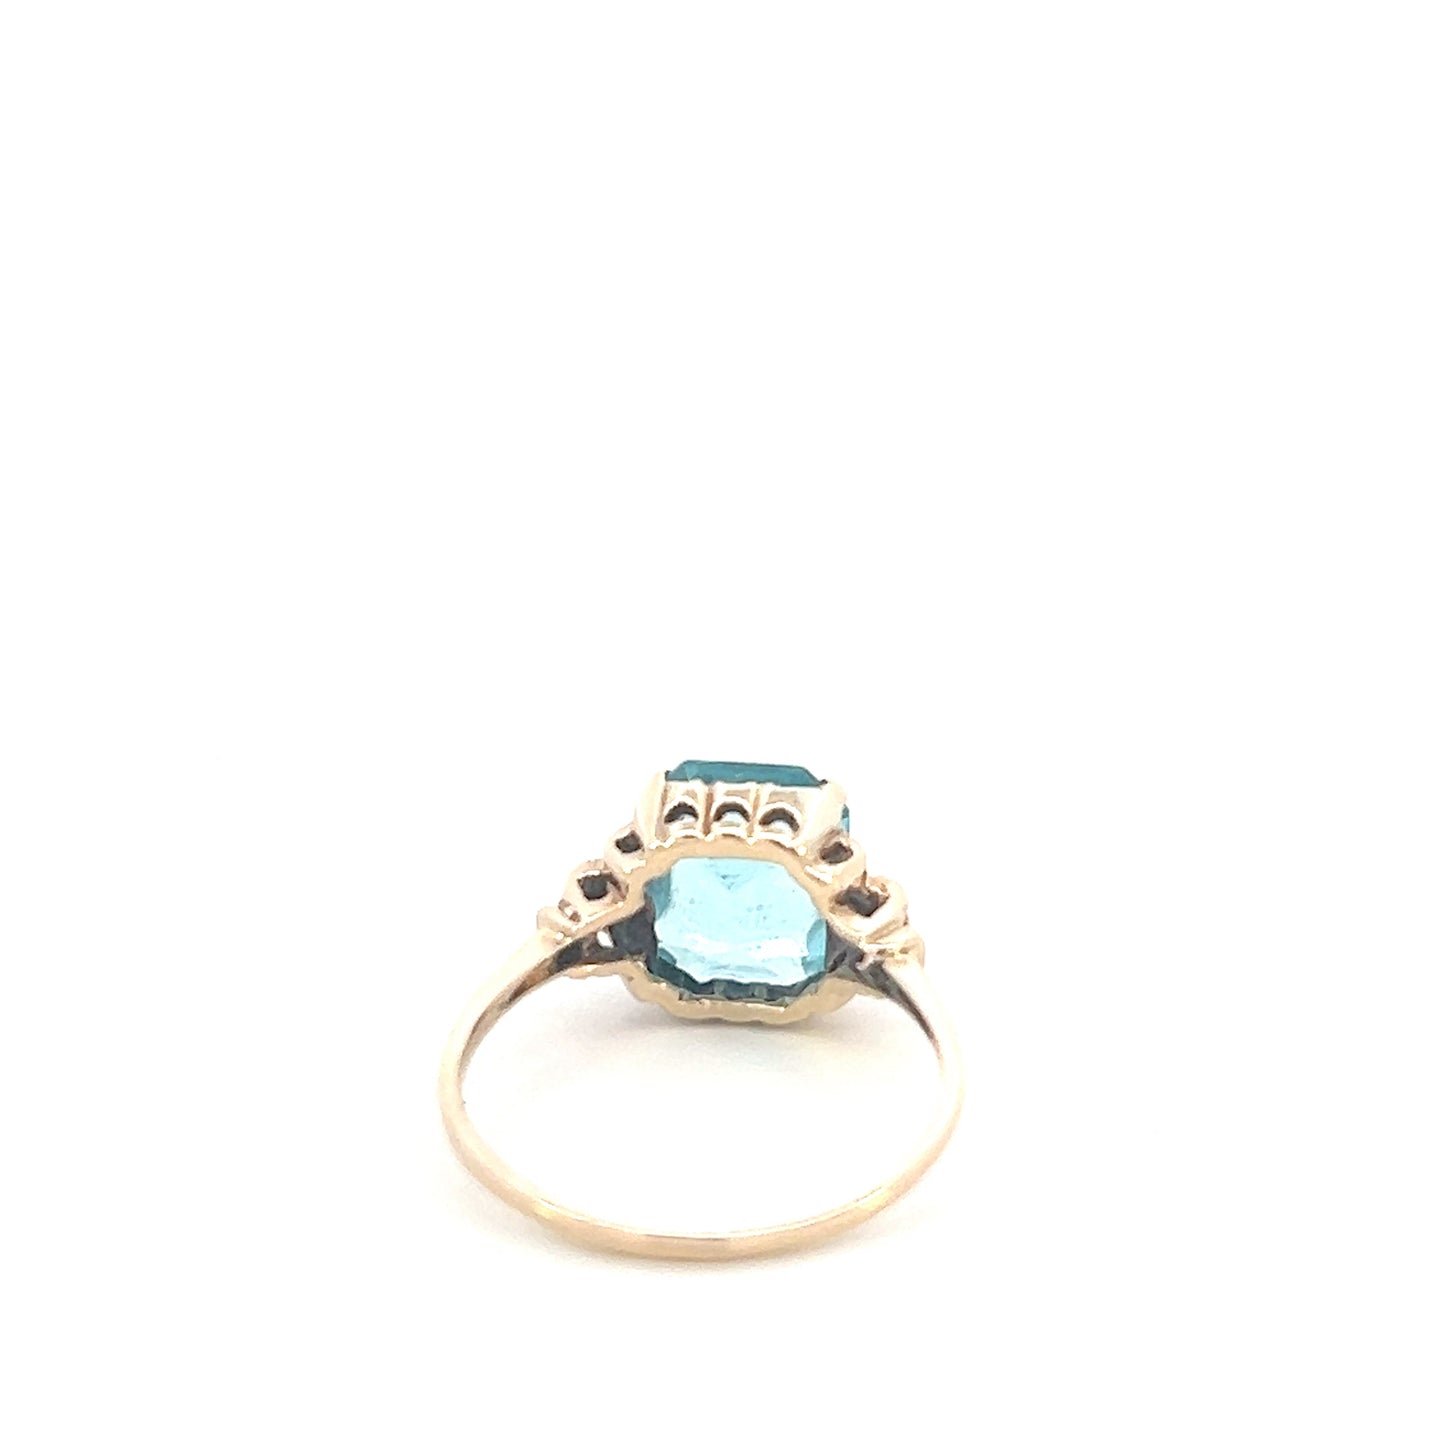 Stunning Blue Emerald Cut Ring 10k Size 7